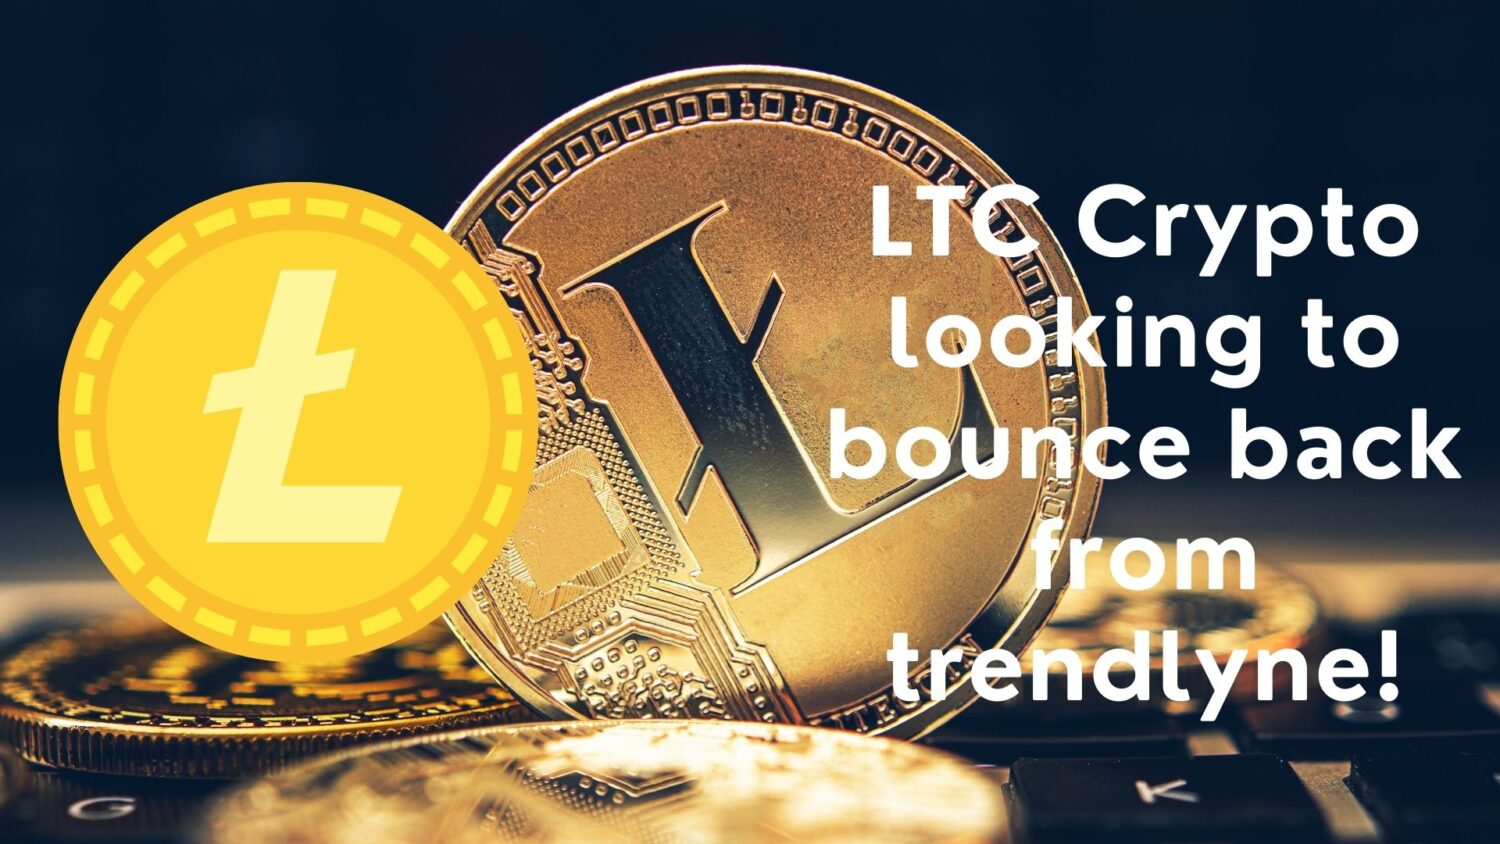 Ltc Crypto Price Prediction